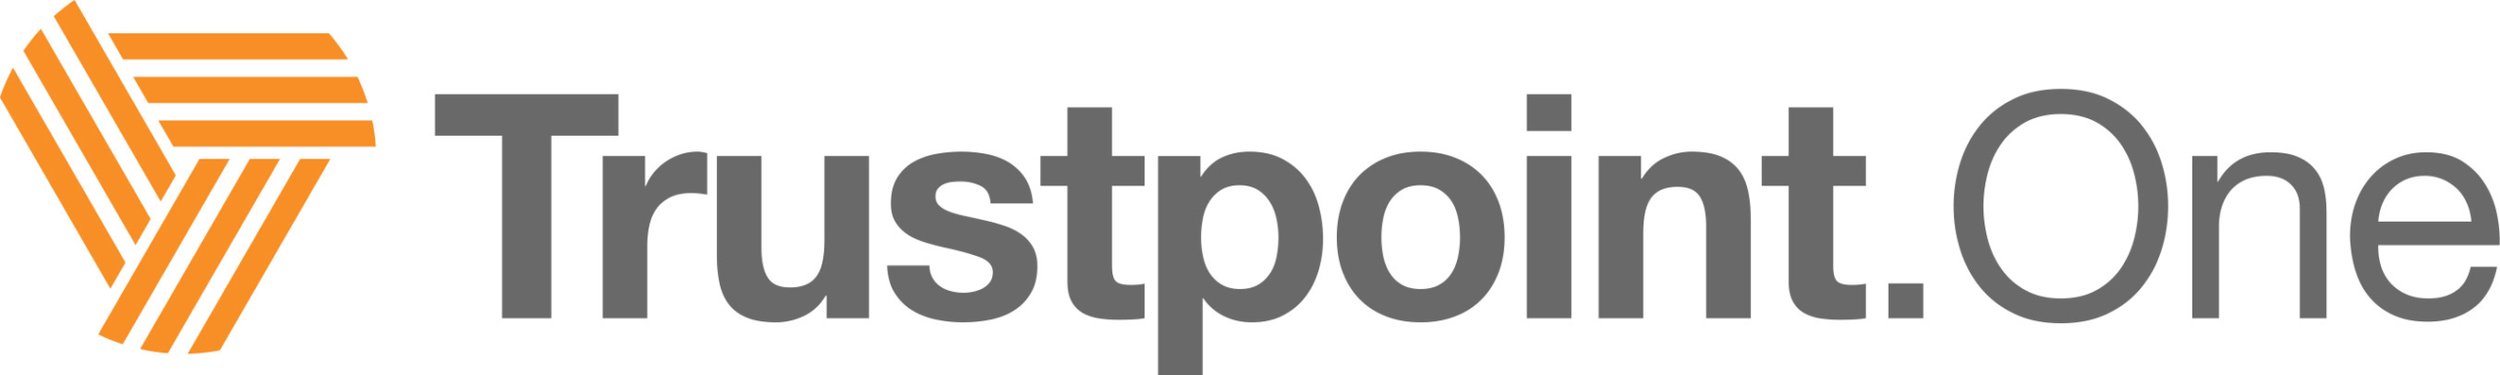 Trustpoint.One-Logo-scaled.jpg